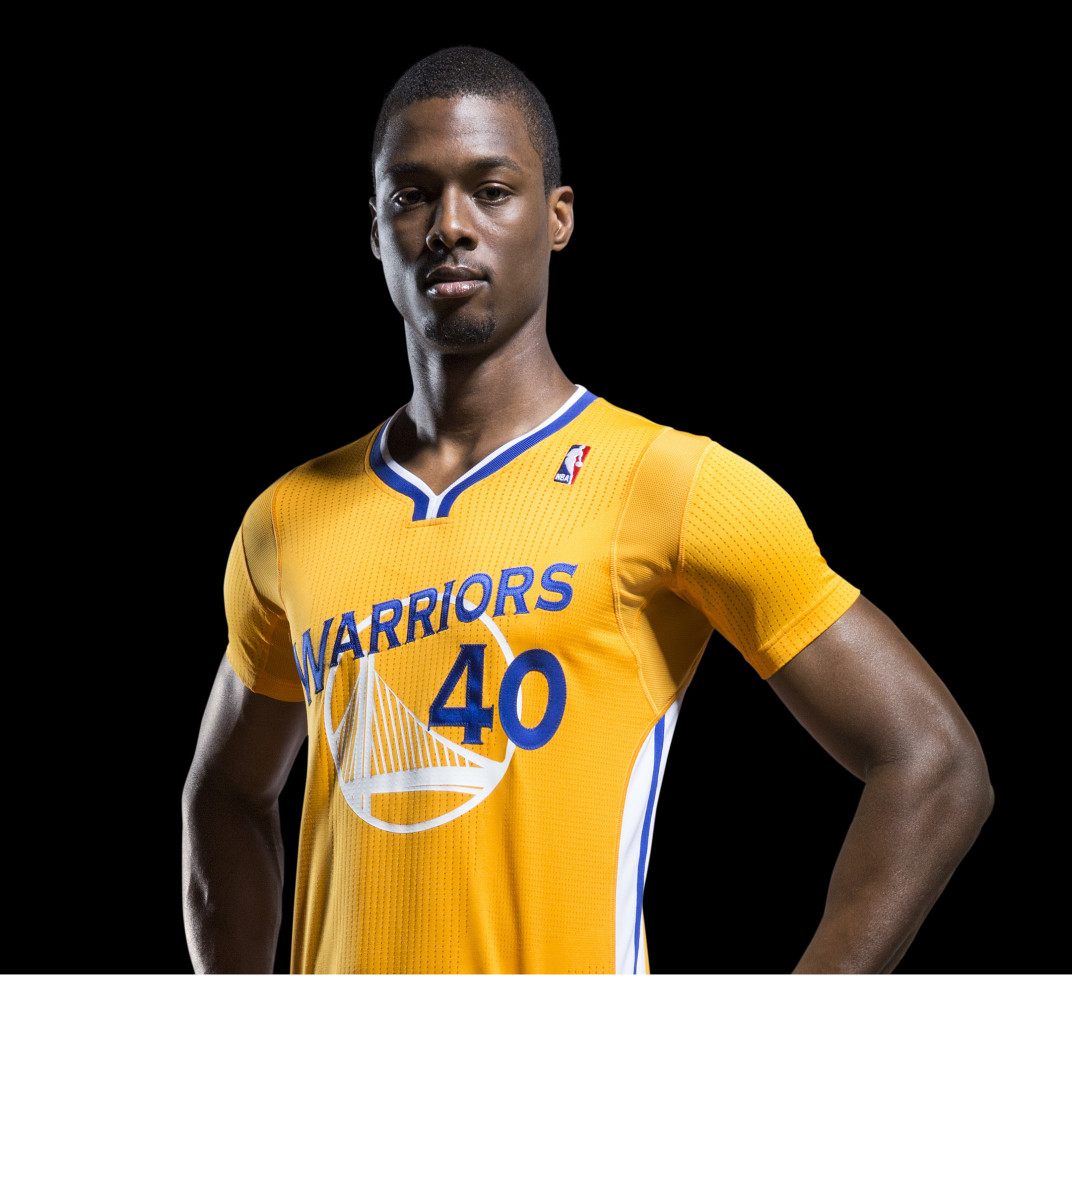 NBA's LaRocca: League Will Stop Using Adidas Sleeved Jerseys If